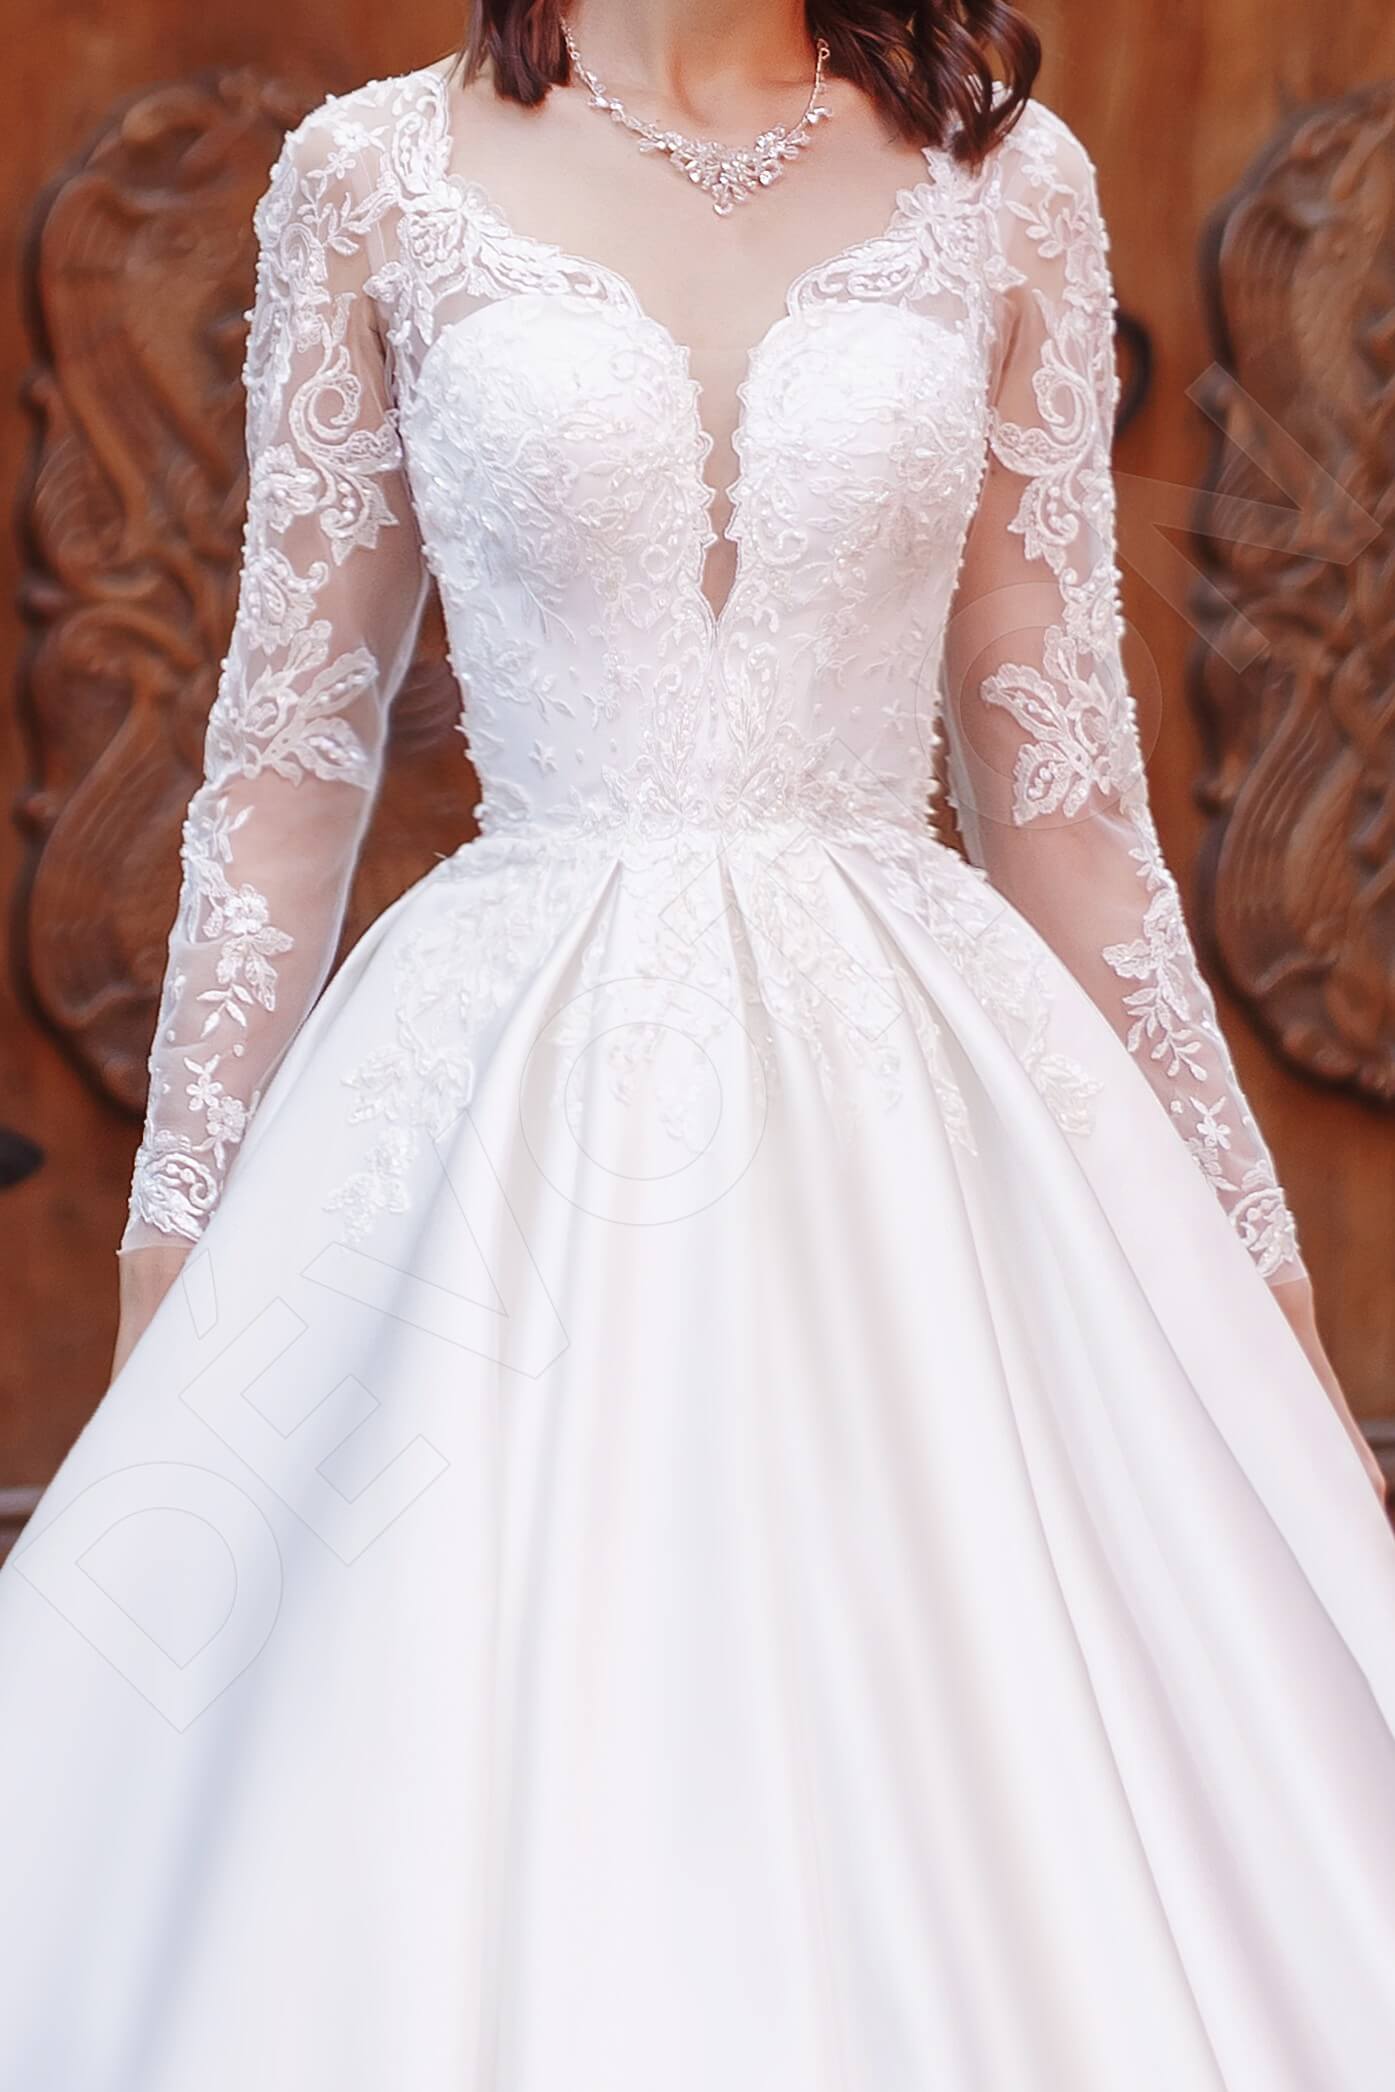 Halliana Princess/Ball Gown Long sleeve Open back Wedding Dress 2